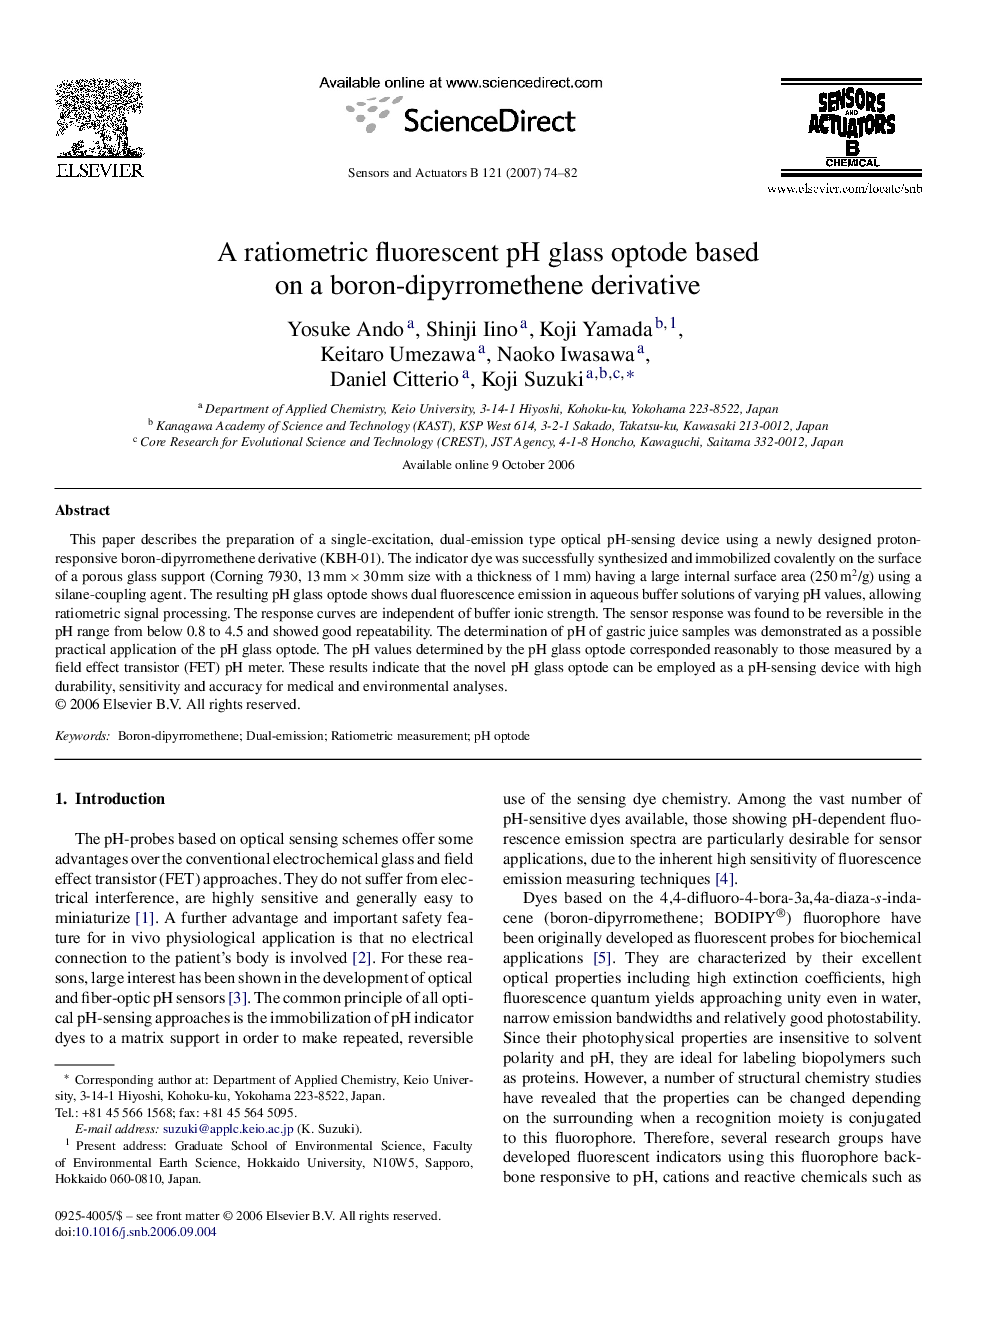 A ratiometric fluorescent pH glass optode based on a boron-dipyrromethene derivative